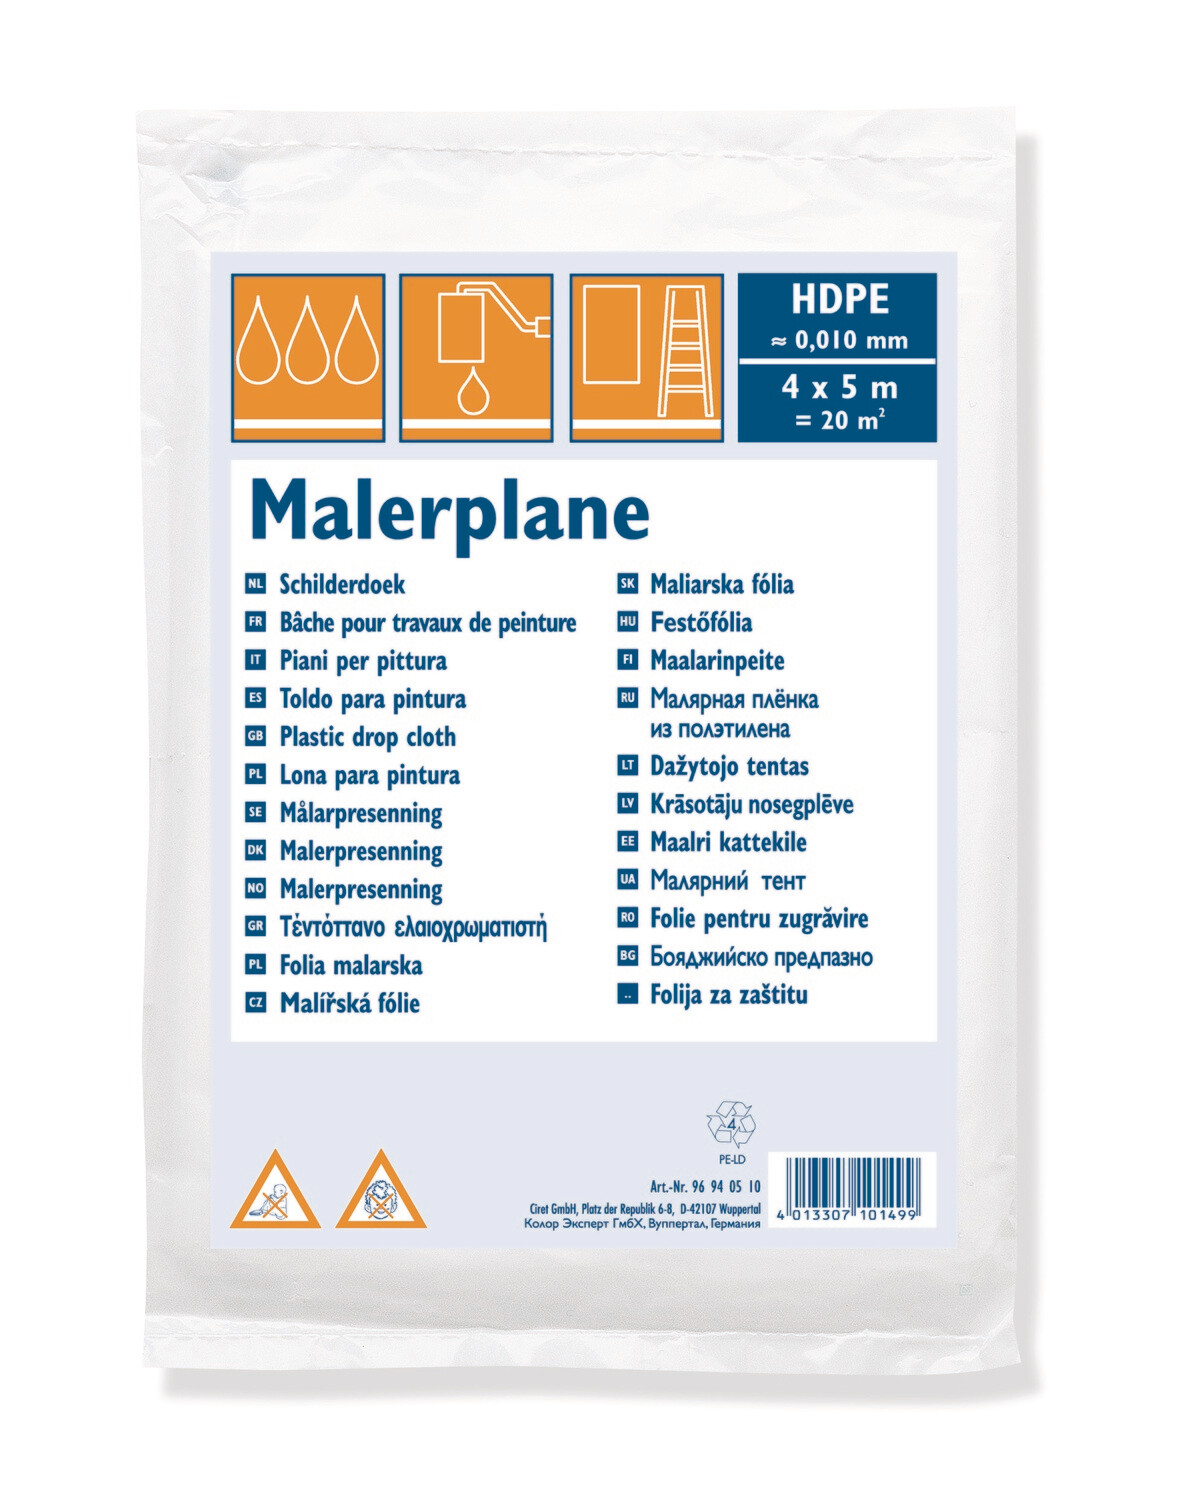 Malerplane - 4 x 5 m = 20 m2, 10 my